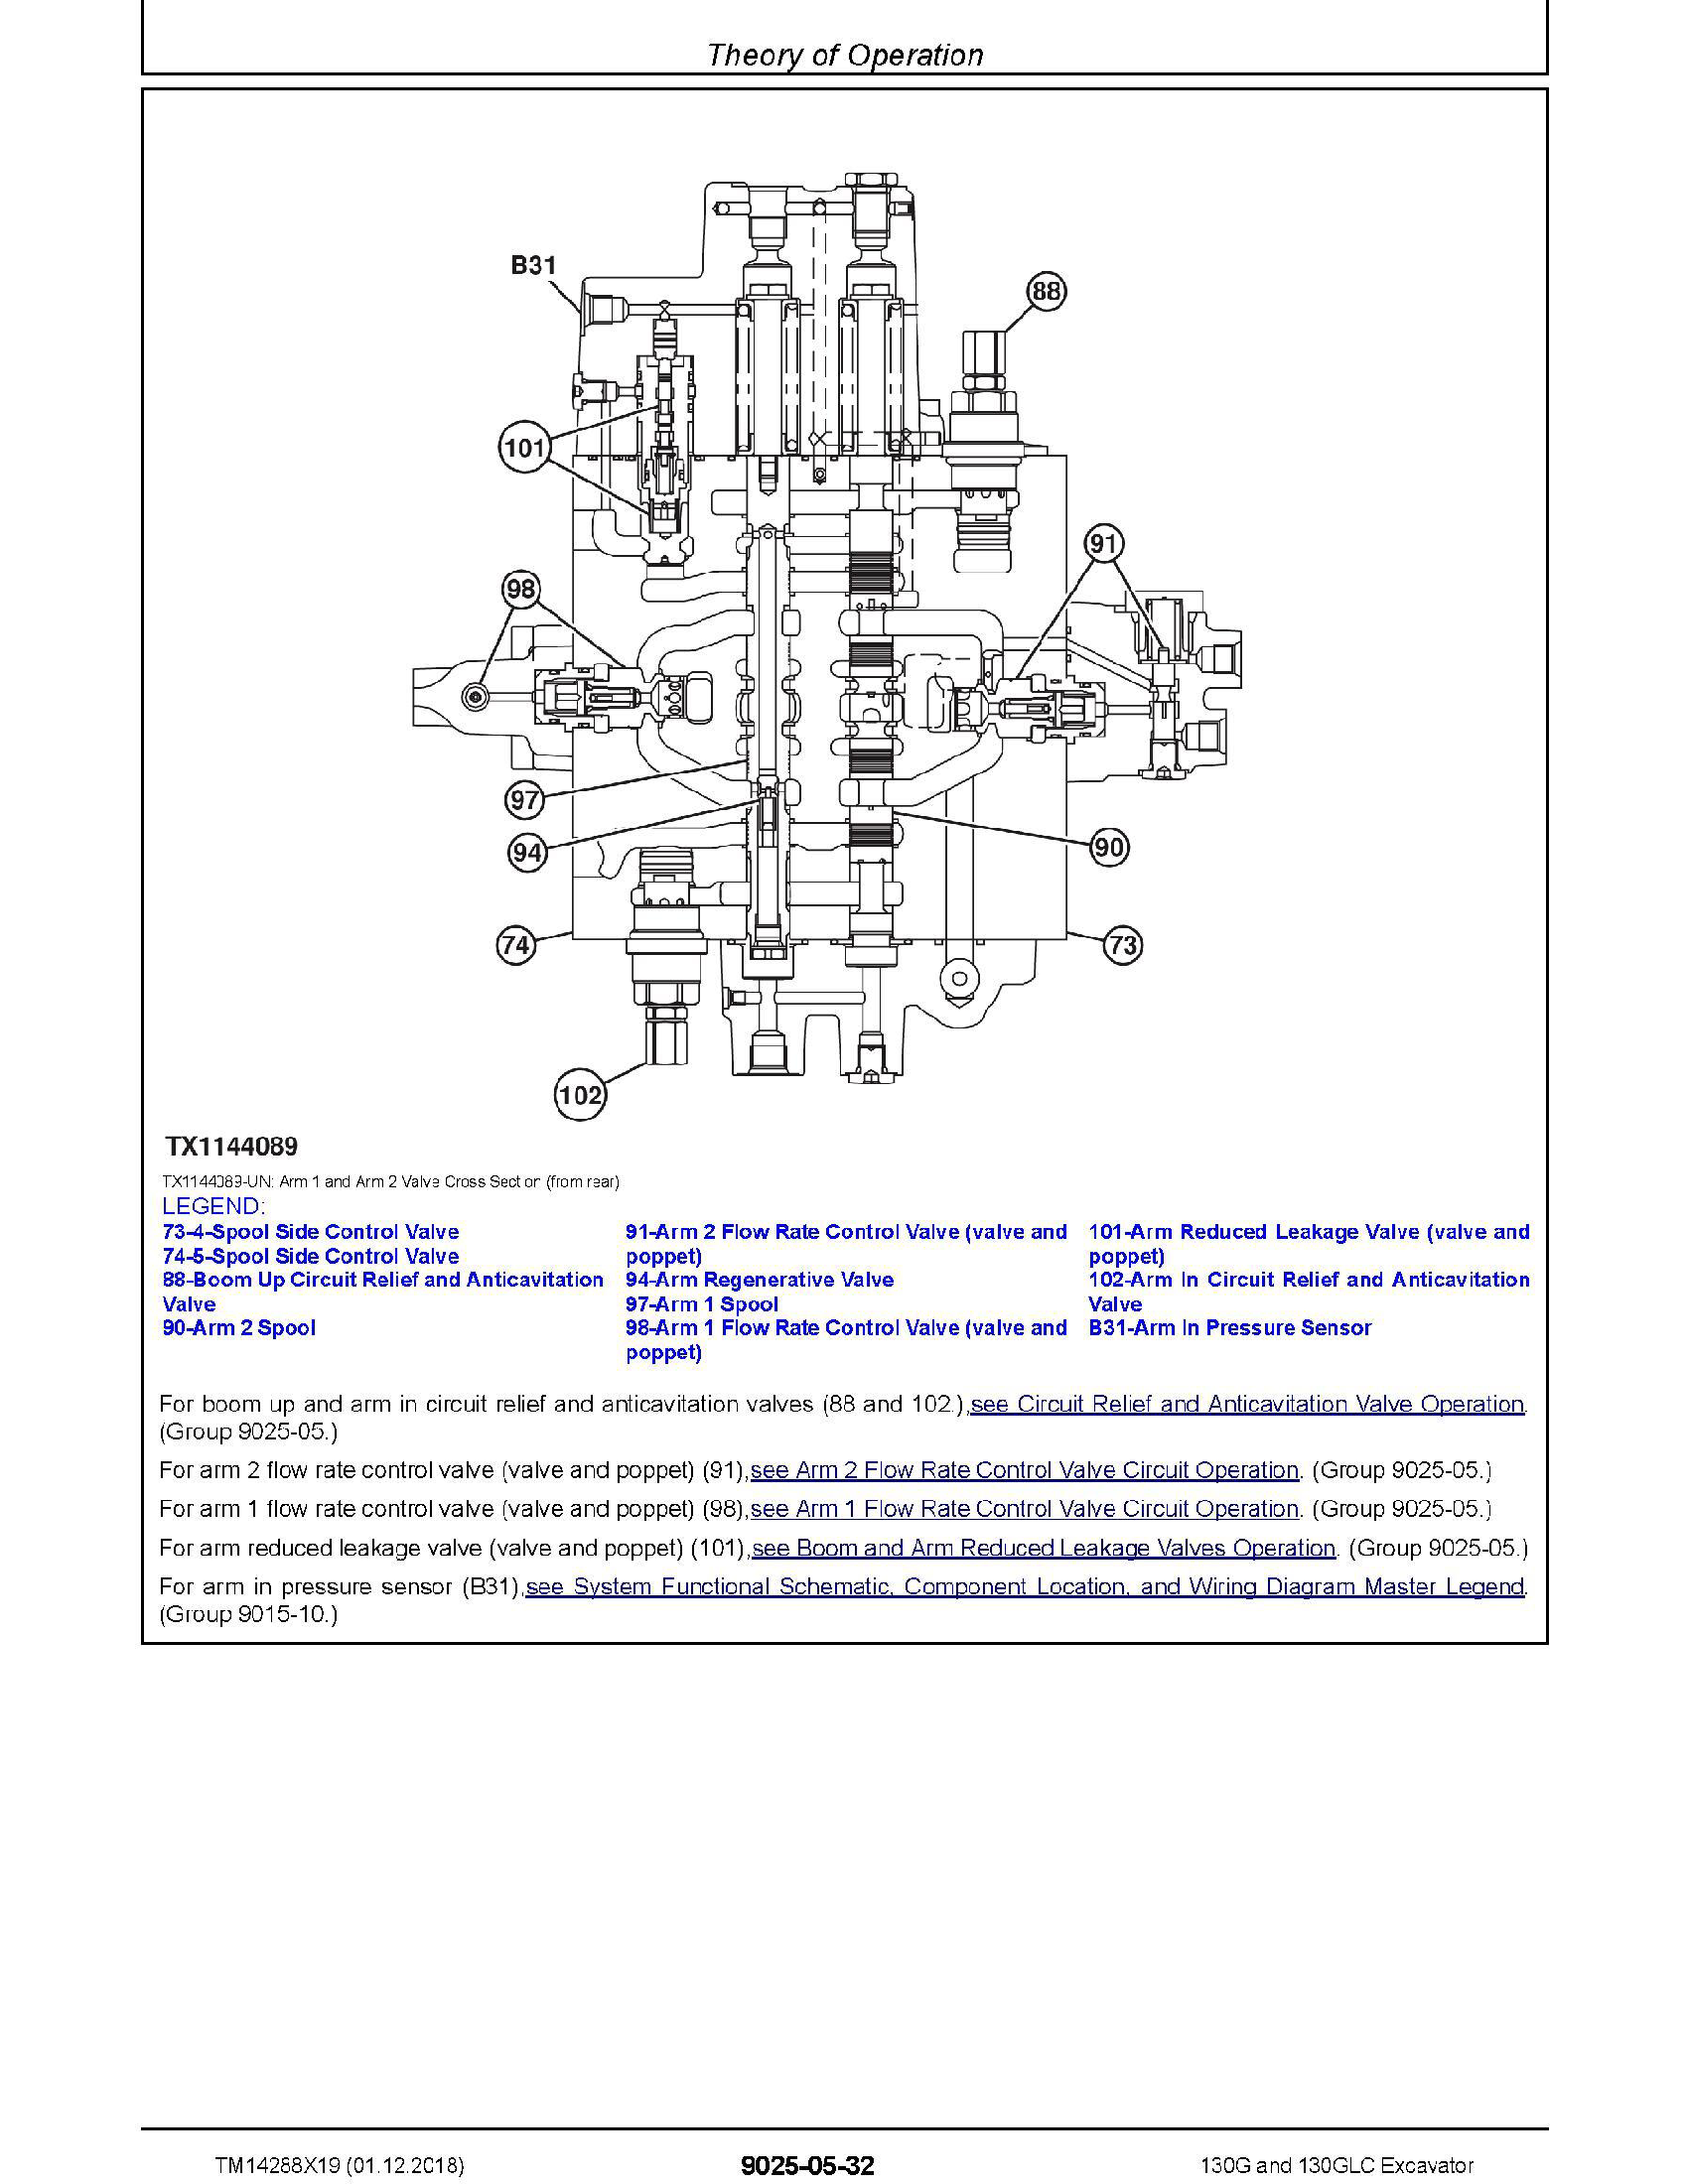 John Deere 17D manual pdf